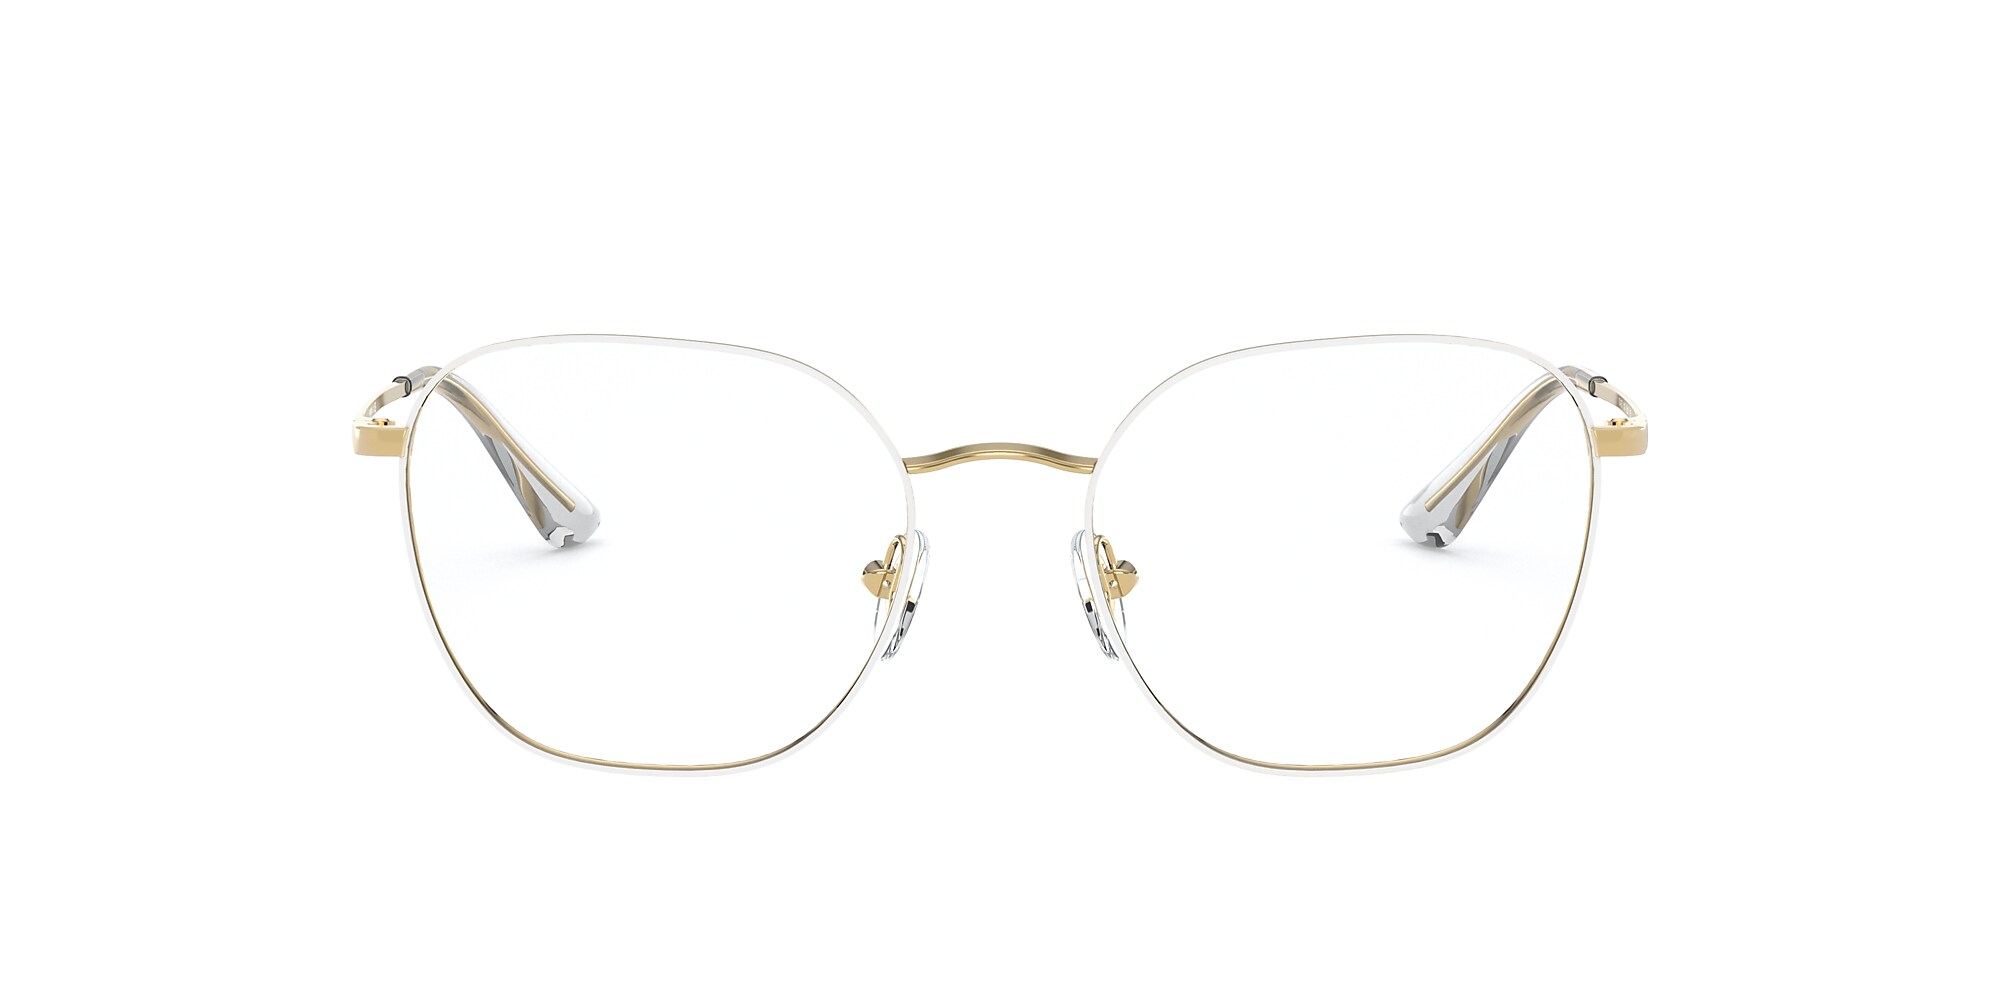 Eyeglasses VO4178 - White/gold - Demo Lens - Metal | Vogue United States